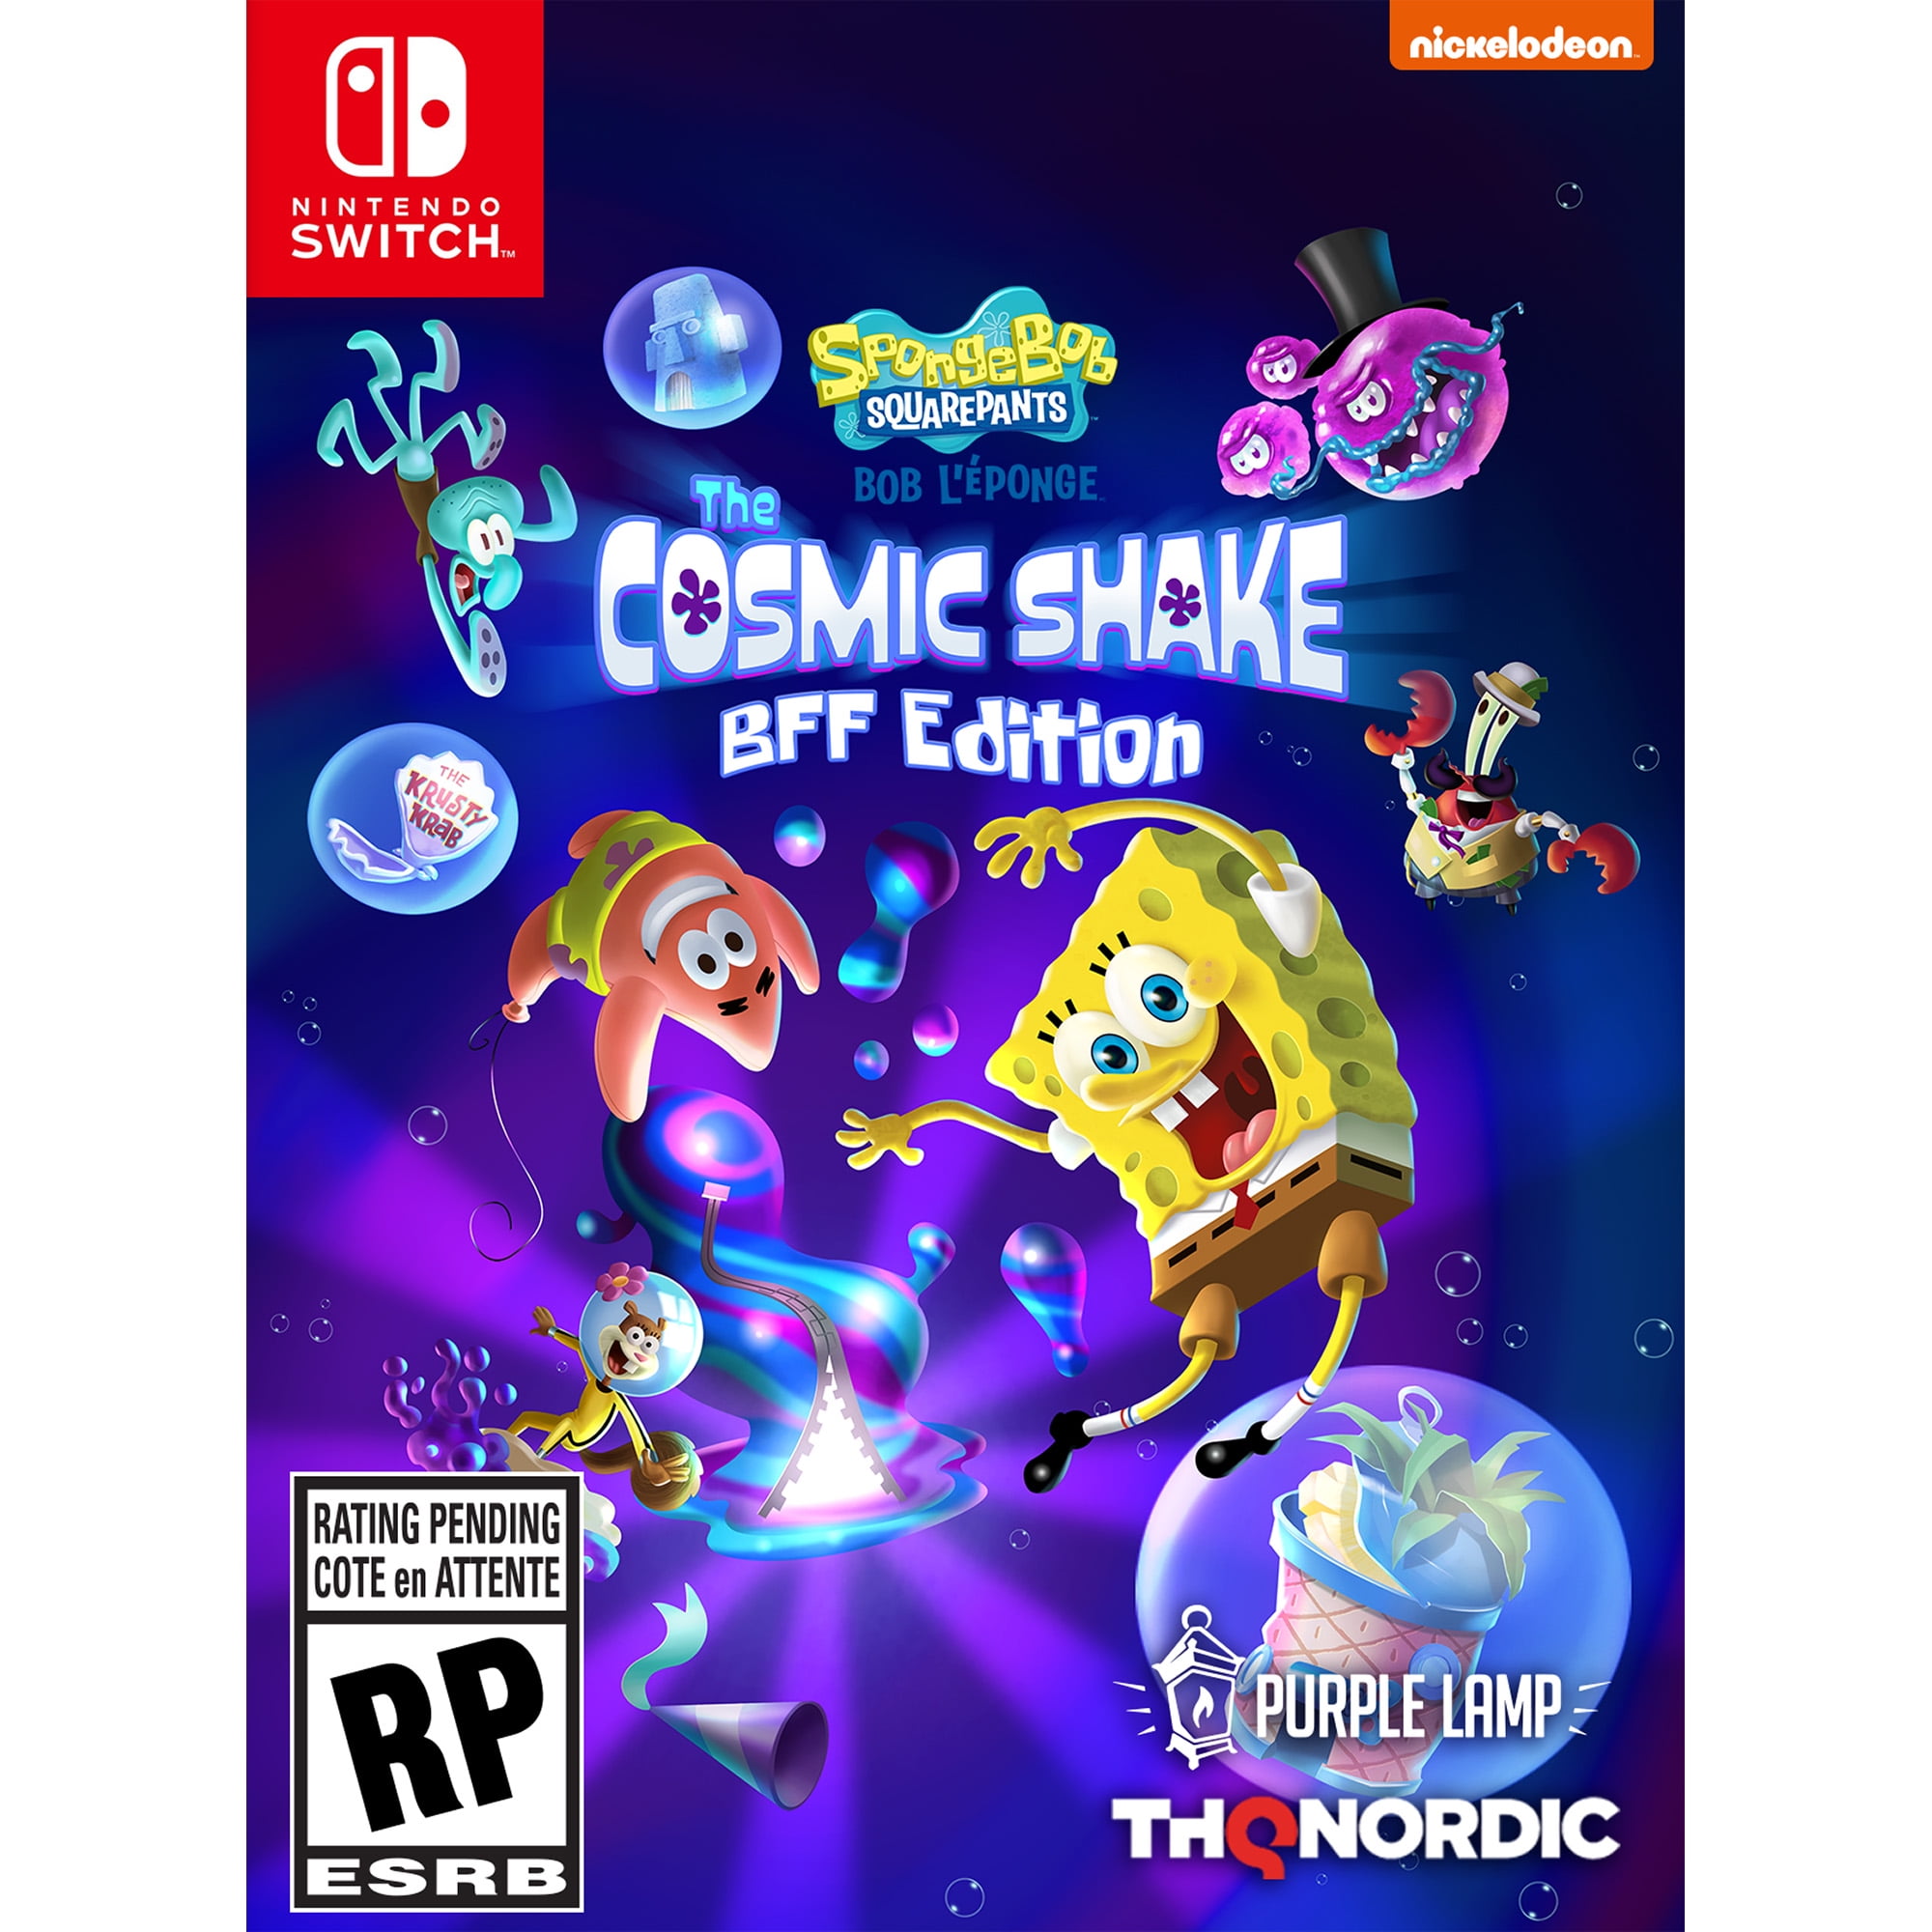 Spongebob SquarePants: Cosmic Nintendo Switch The - Shake Edition - BFF